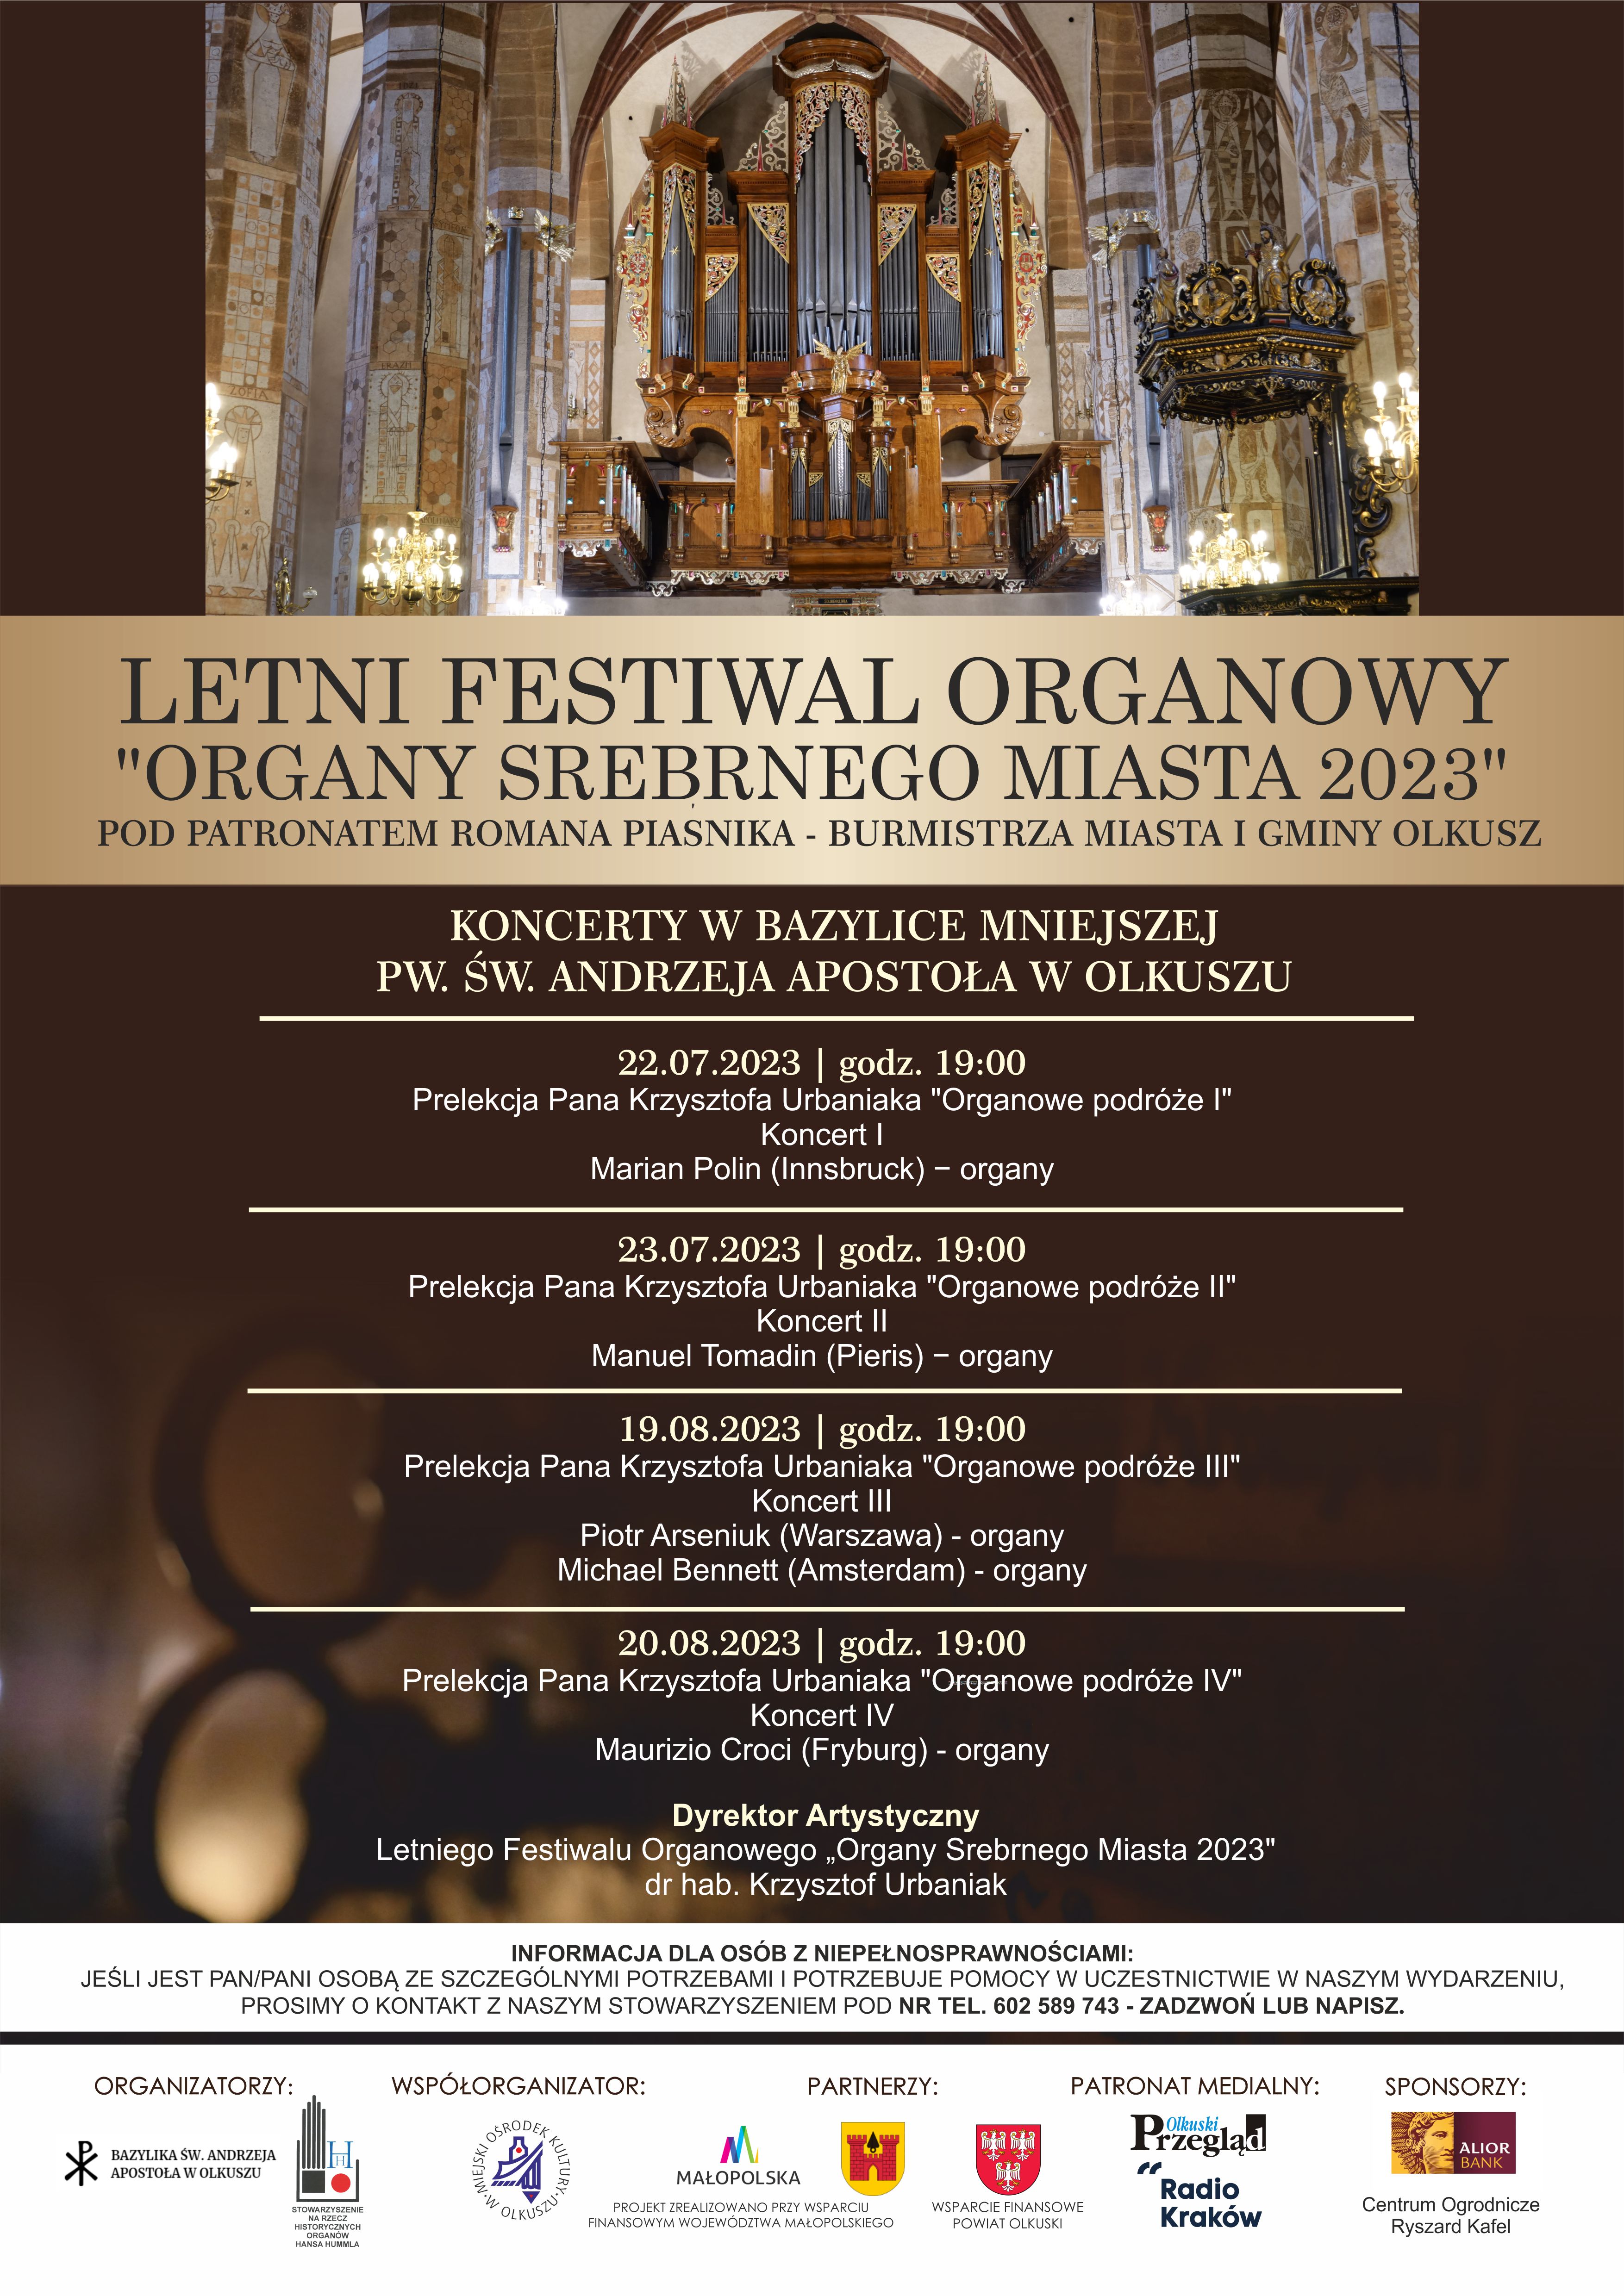 Plakat z zaproszeniem na Letni Festiwal Organowy